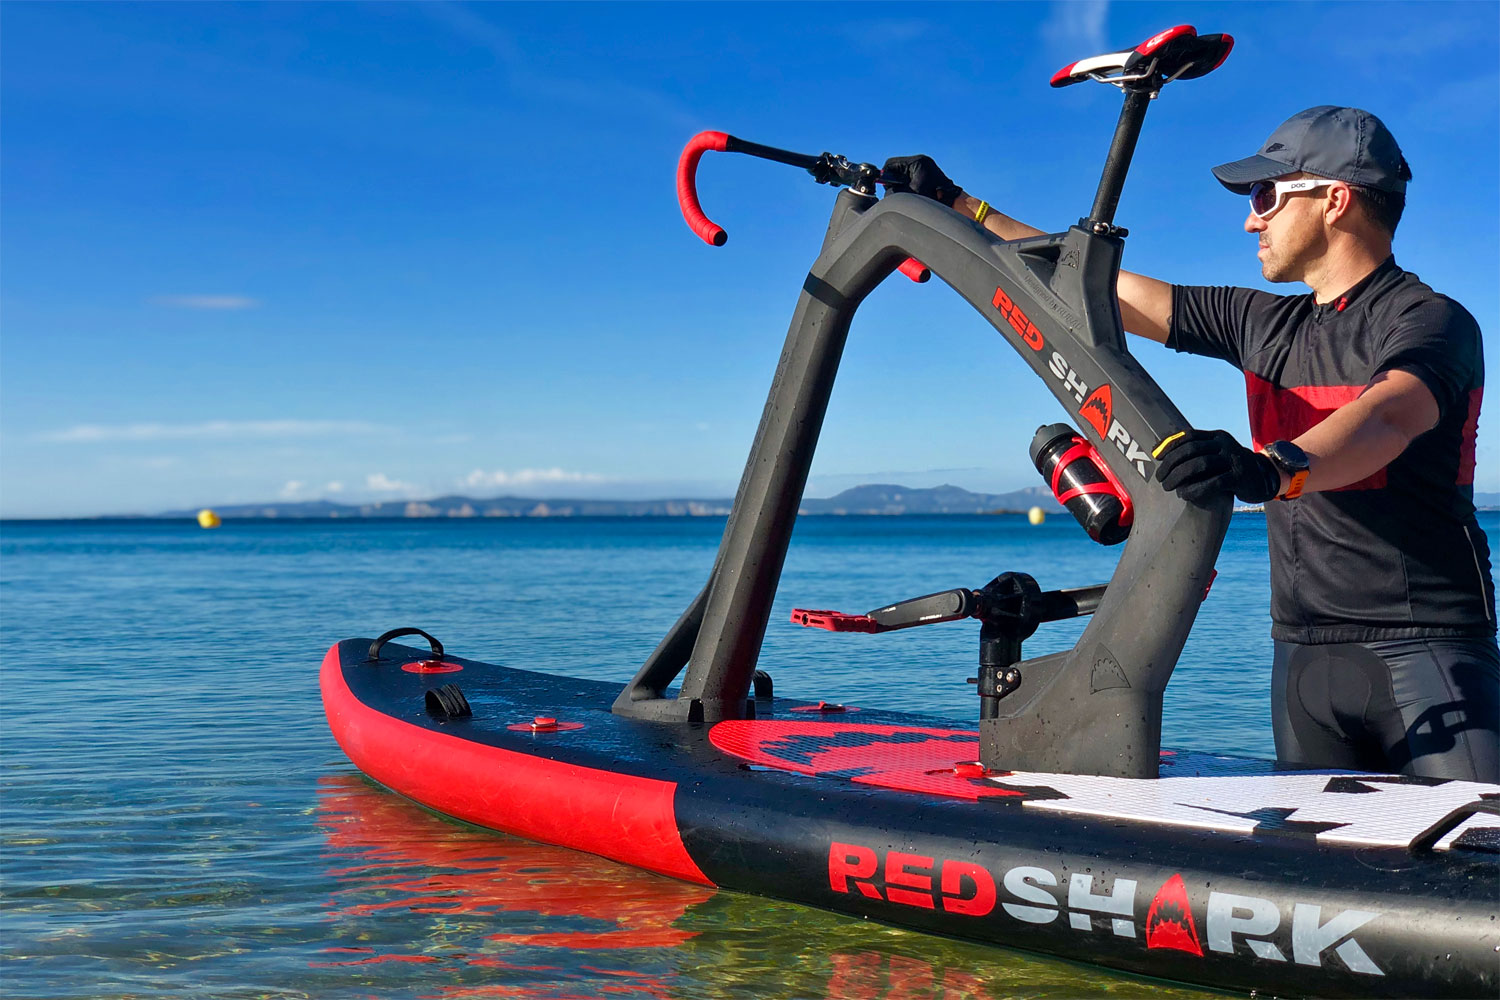 RedShark BoardBike, packable pedal-powered boat bikes